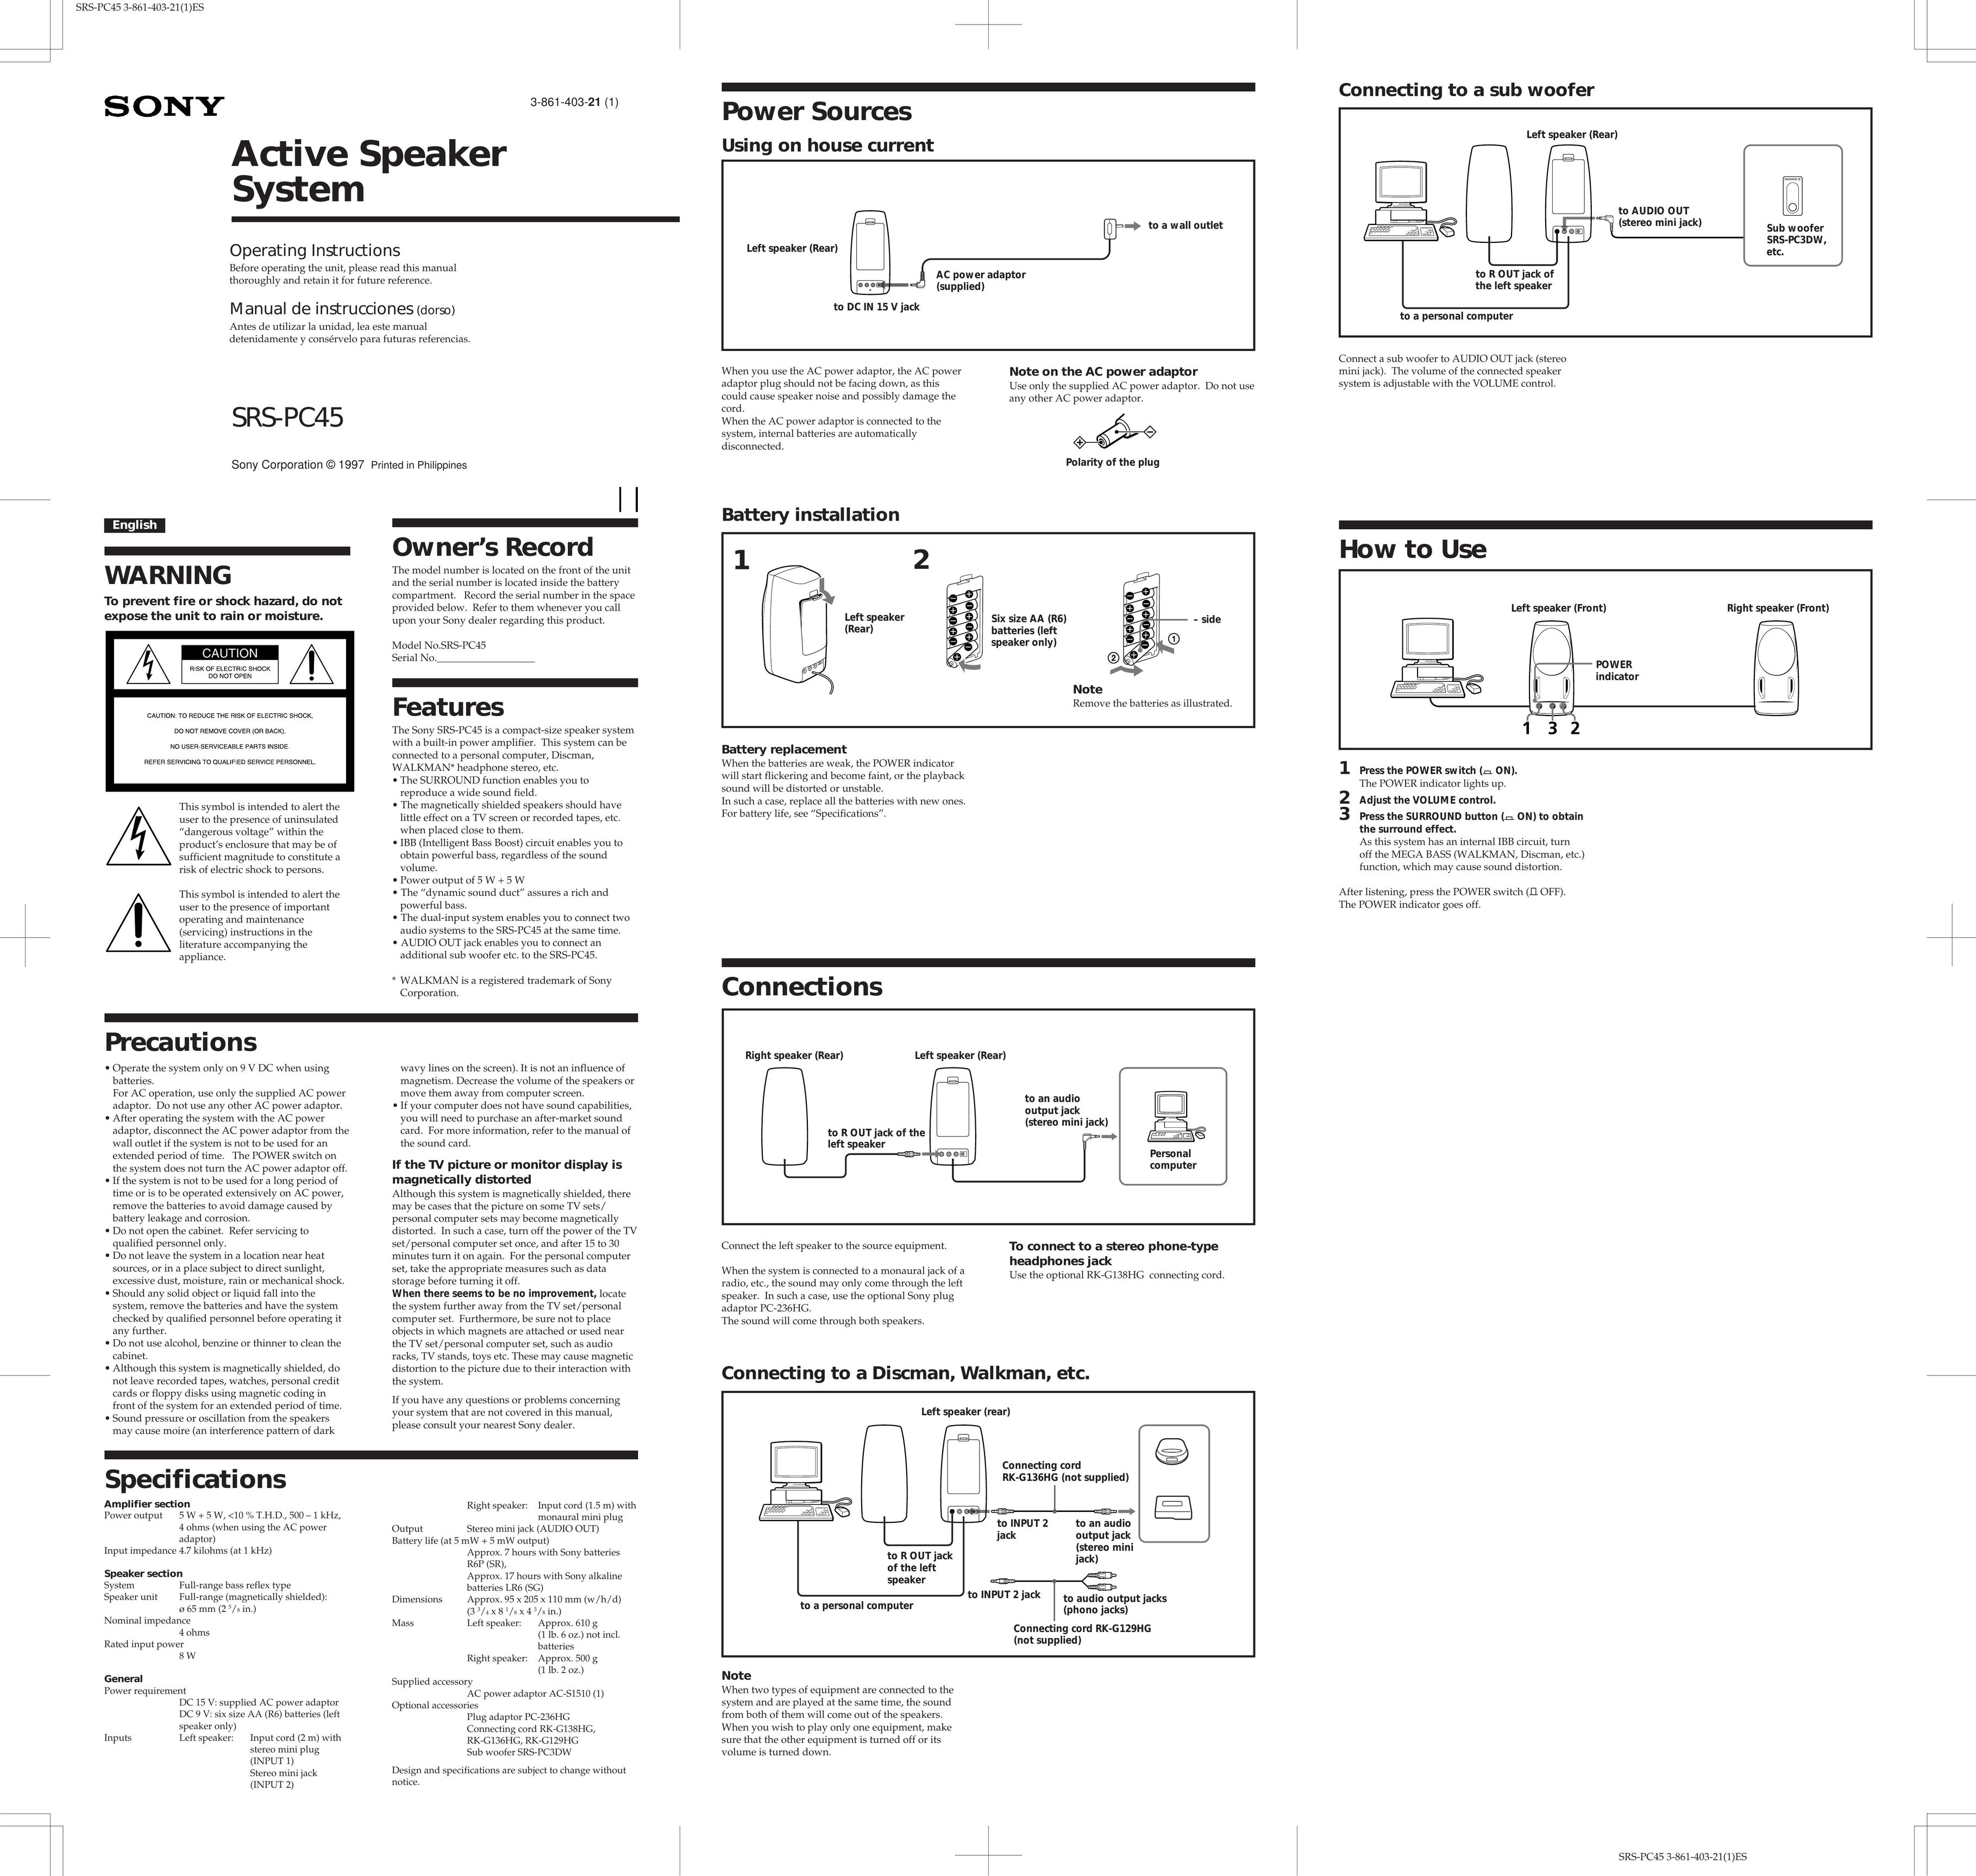 Sony SRS-PC45 Portable Speaker User Manual